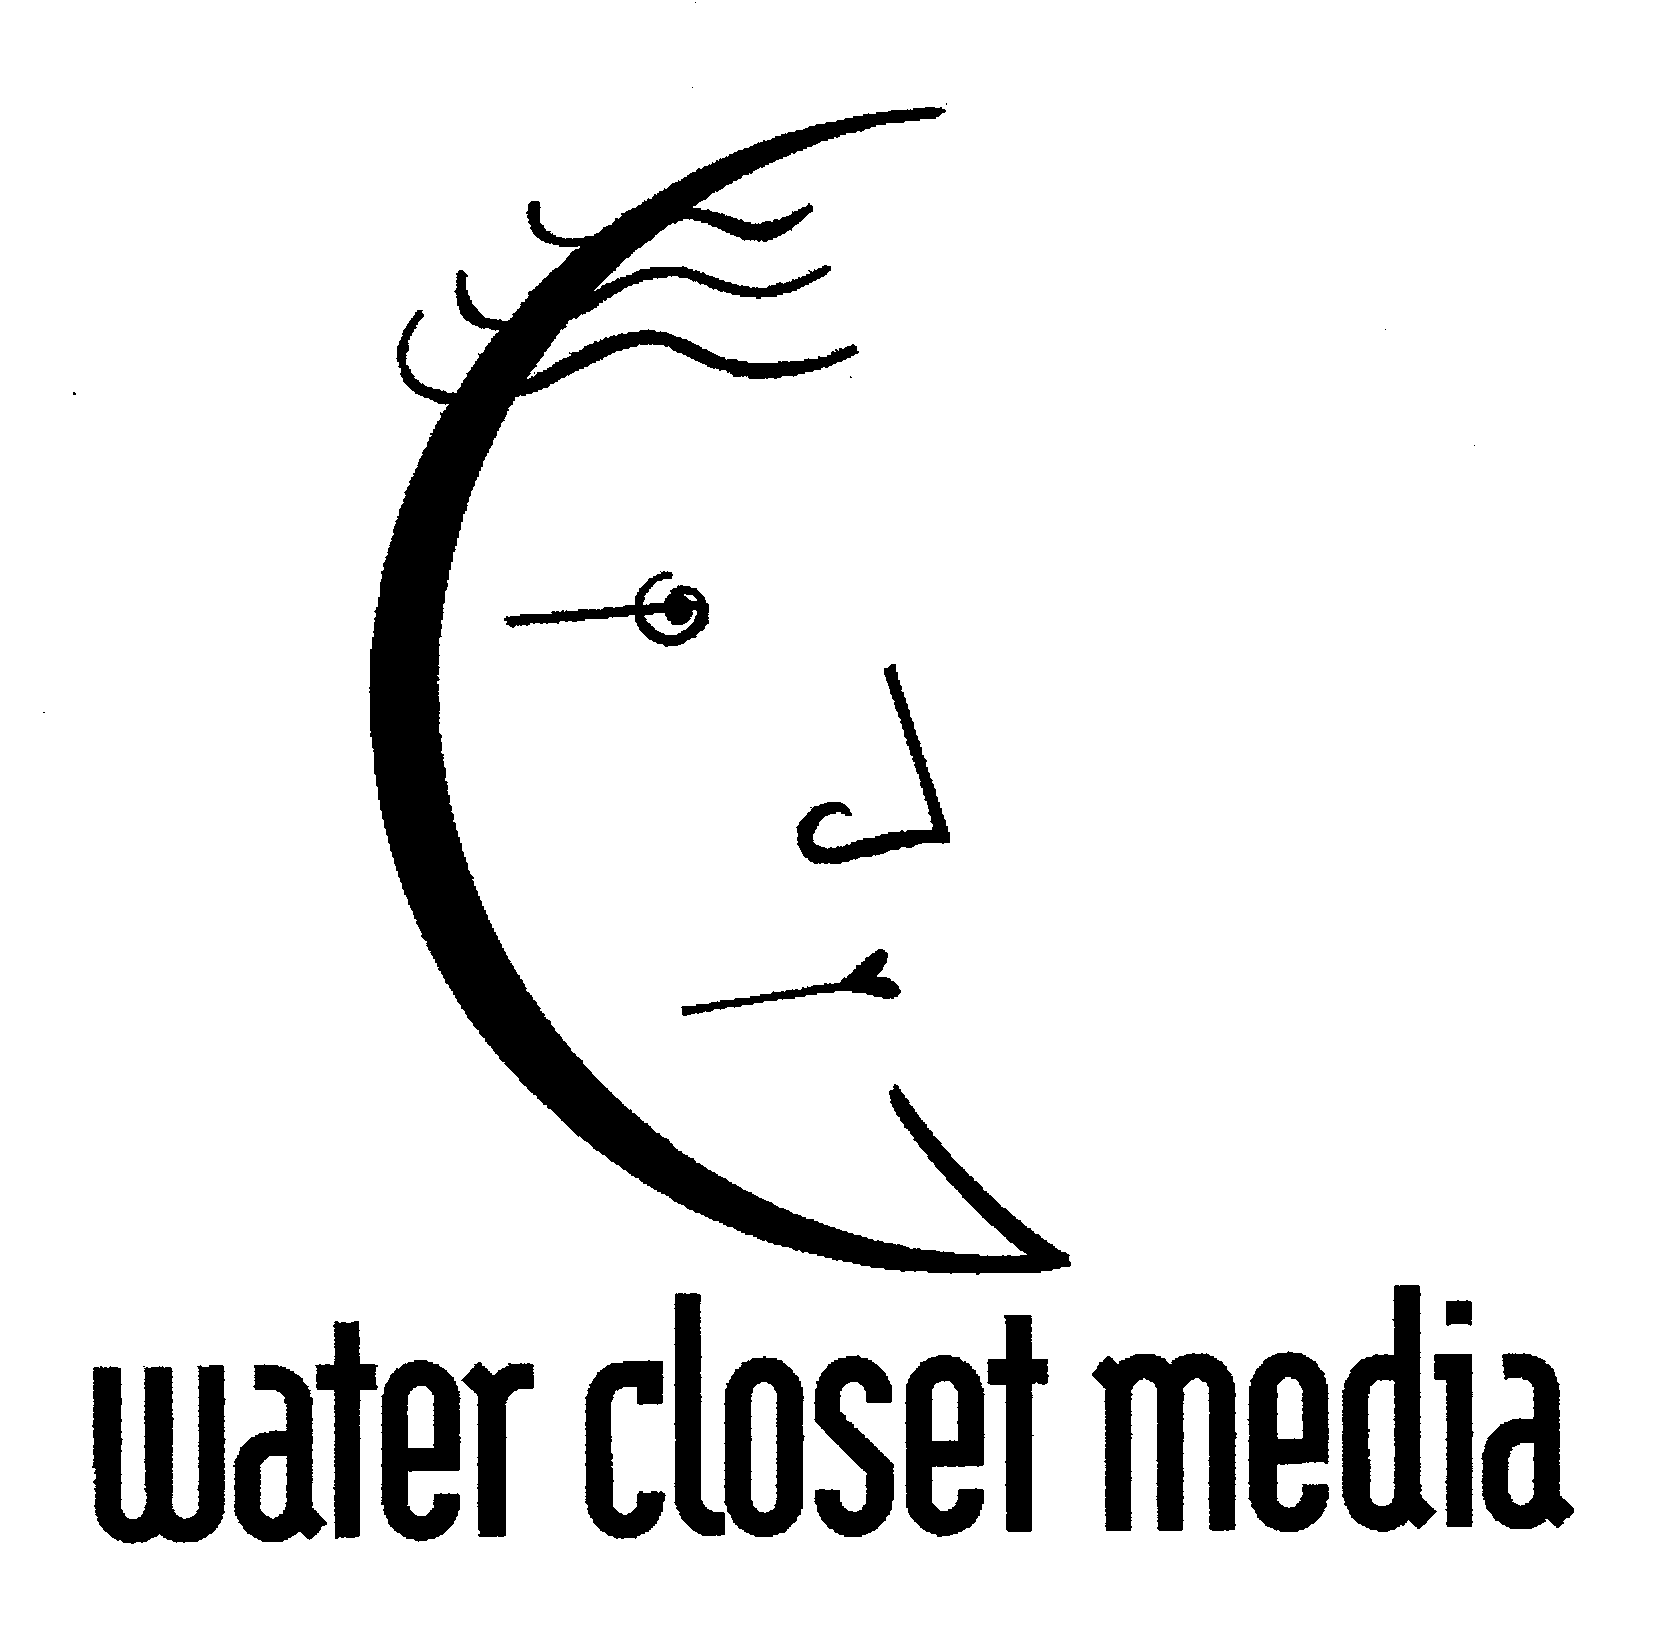  WATER CLOSET MEDIA